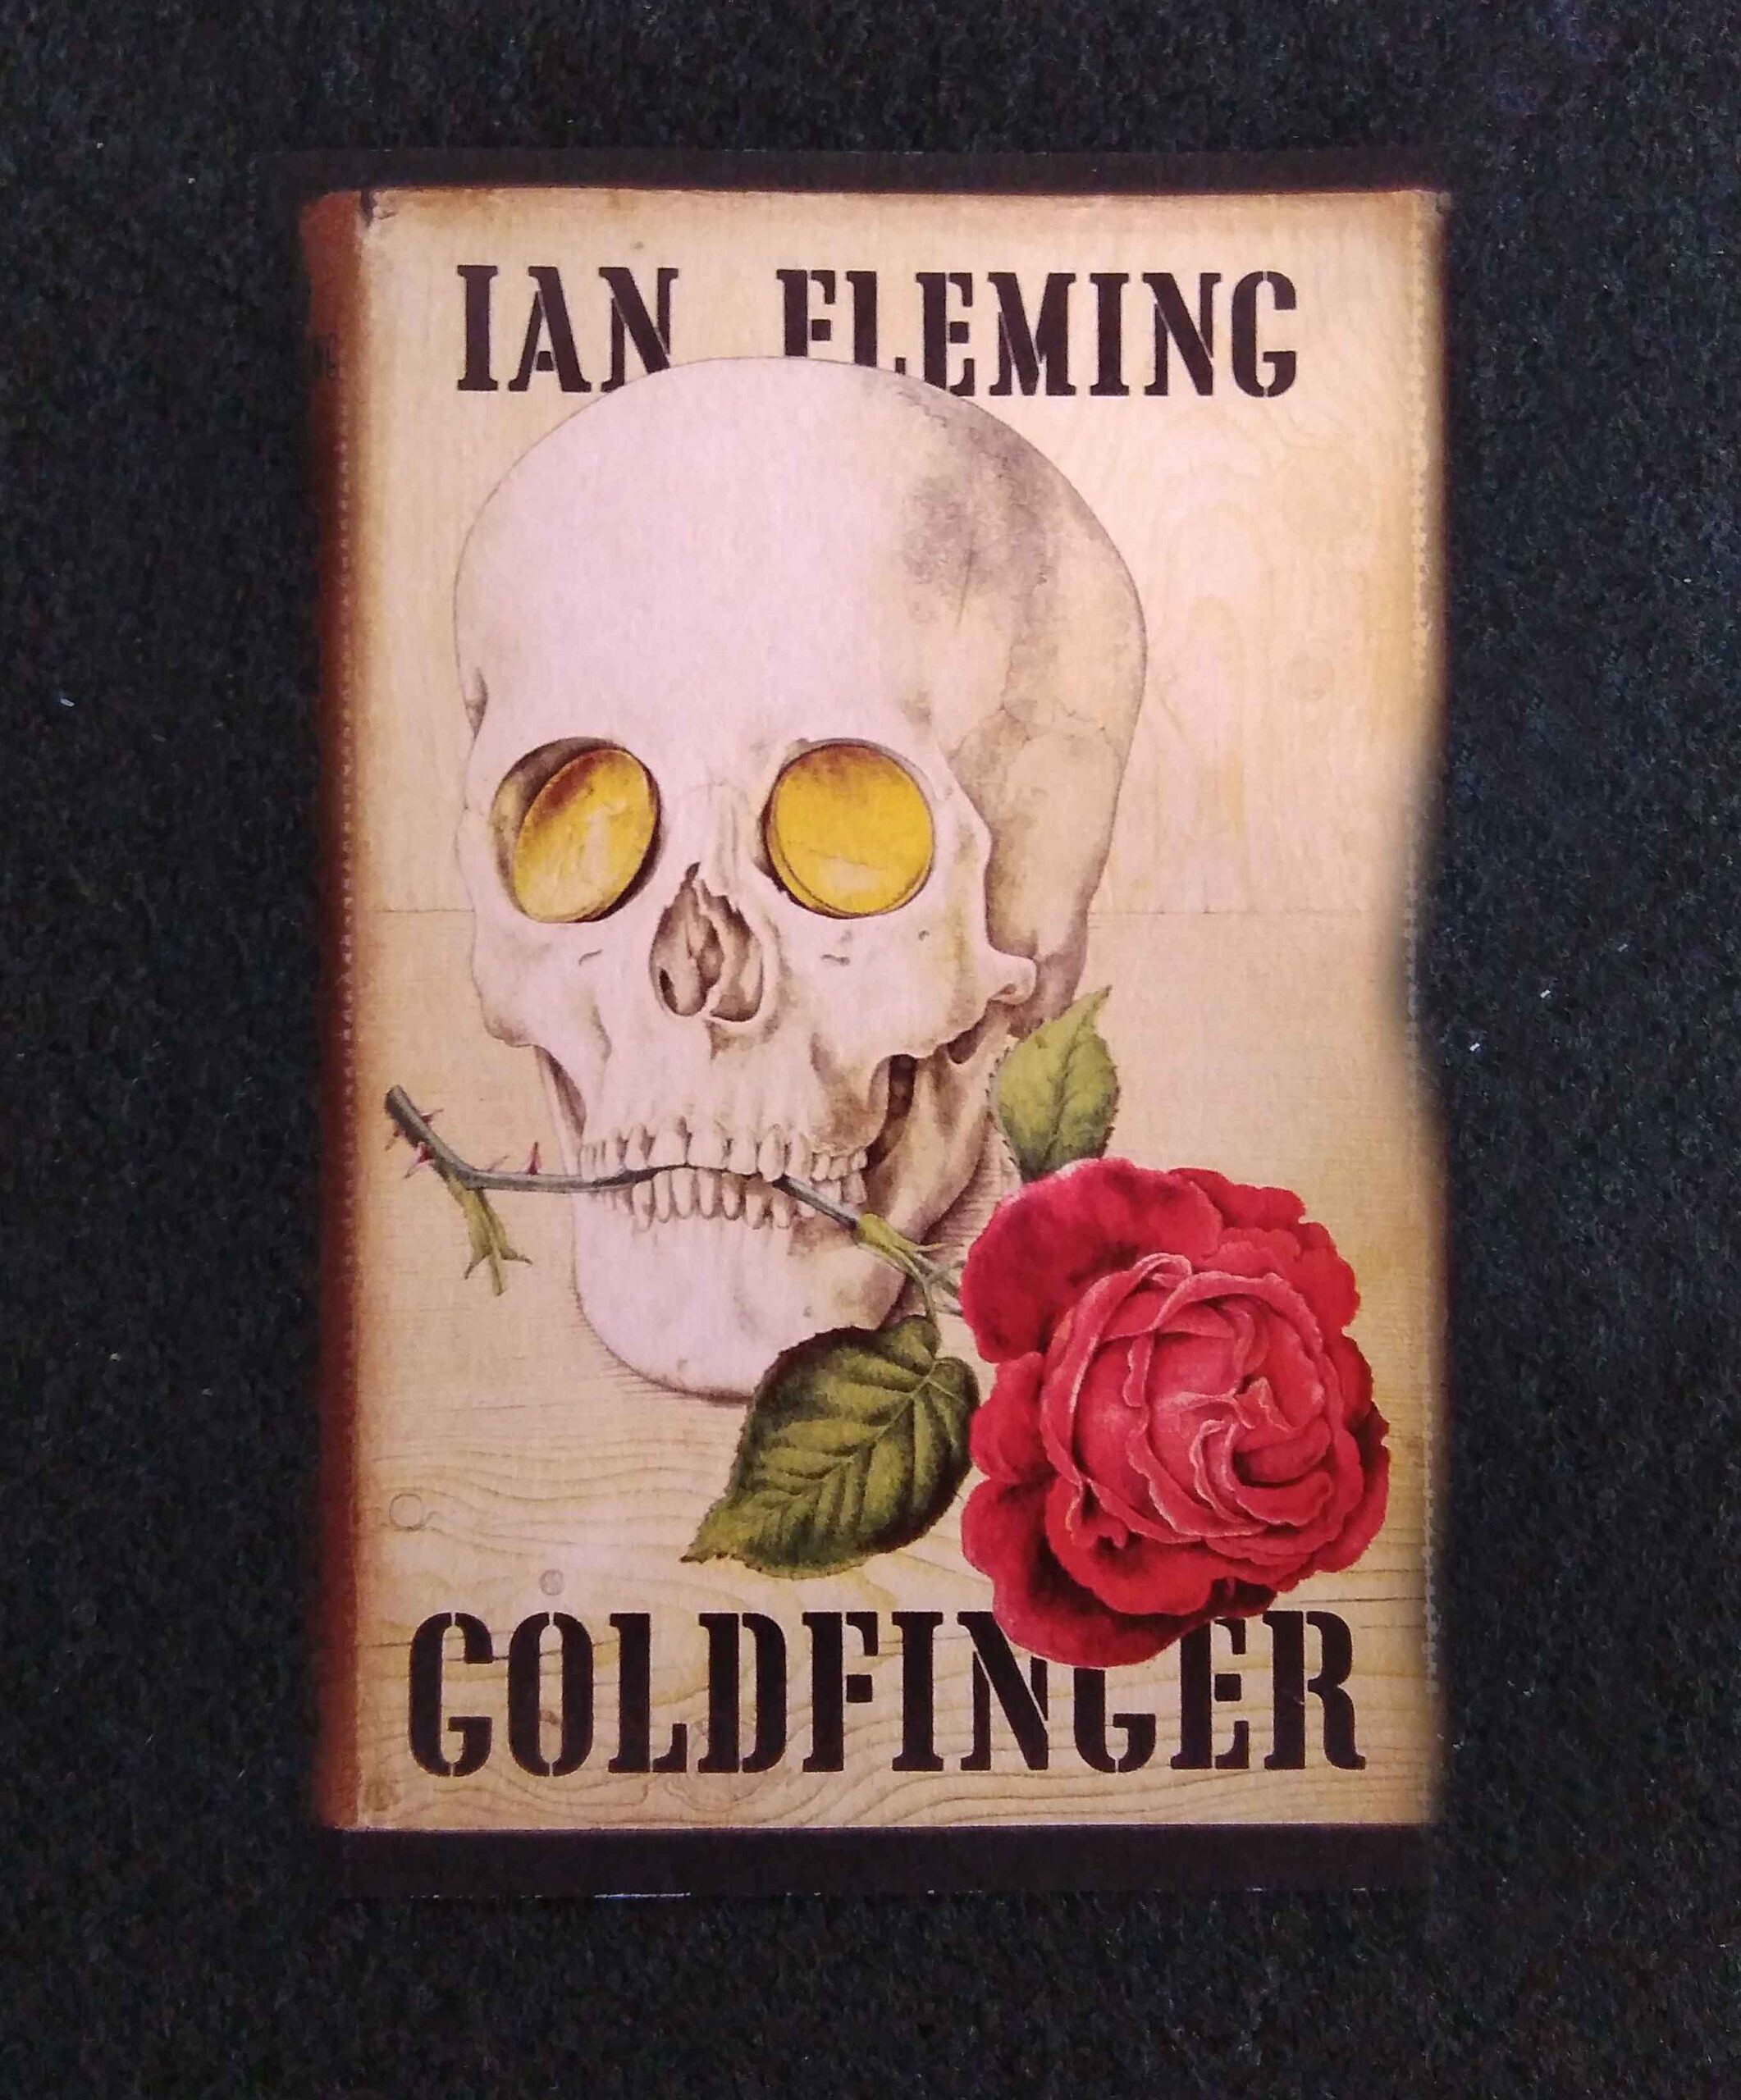 Bond, James Bond 007. Ian Fleming's Book cover illustrator. | Art Tales